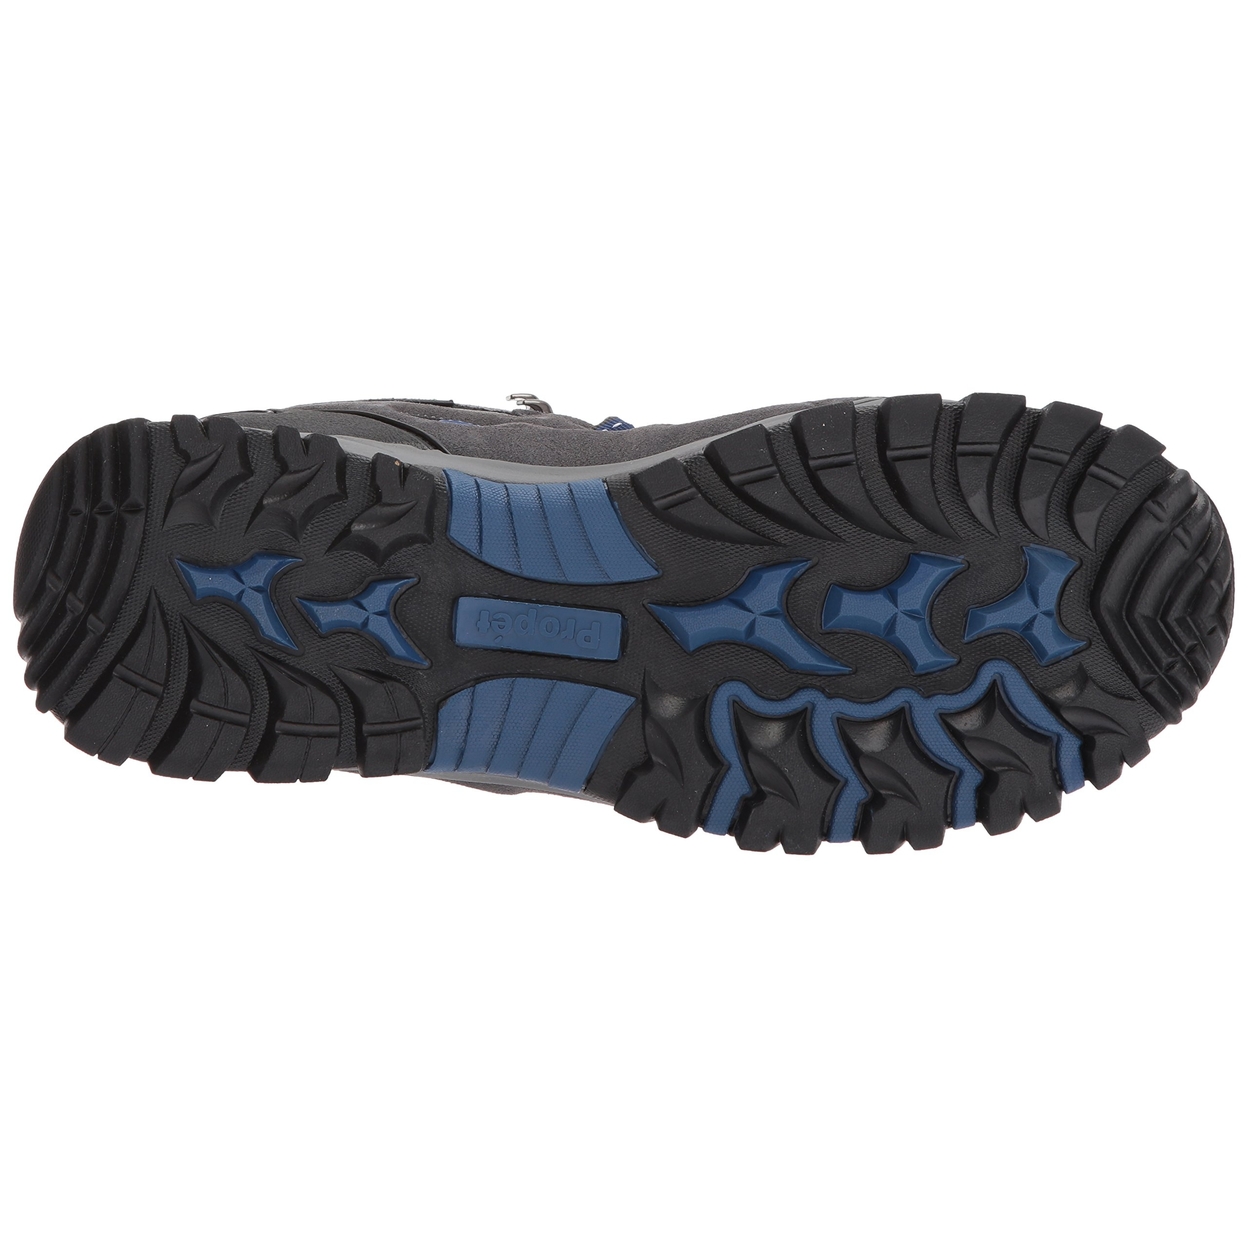 Propet Men's Ridge Walker Hiking Boot Grey/Blue - M3599GRB GREY/BLUE - GREY/BLUE, 16